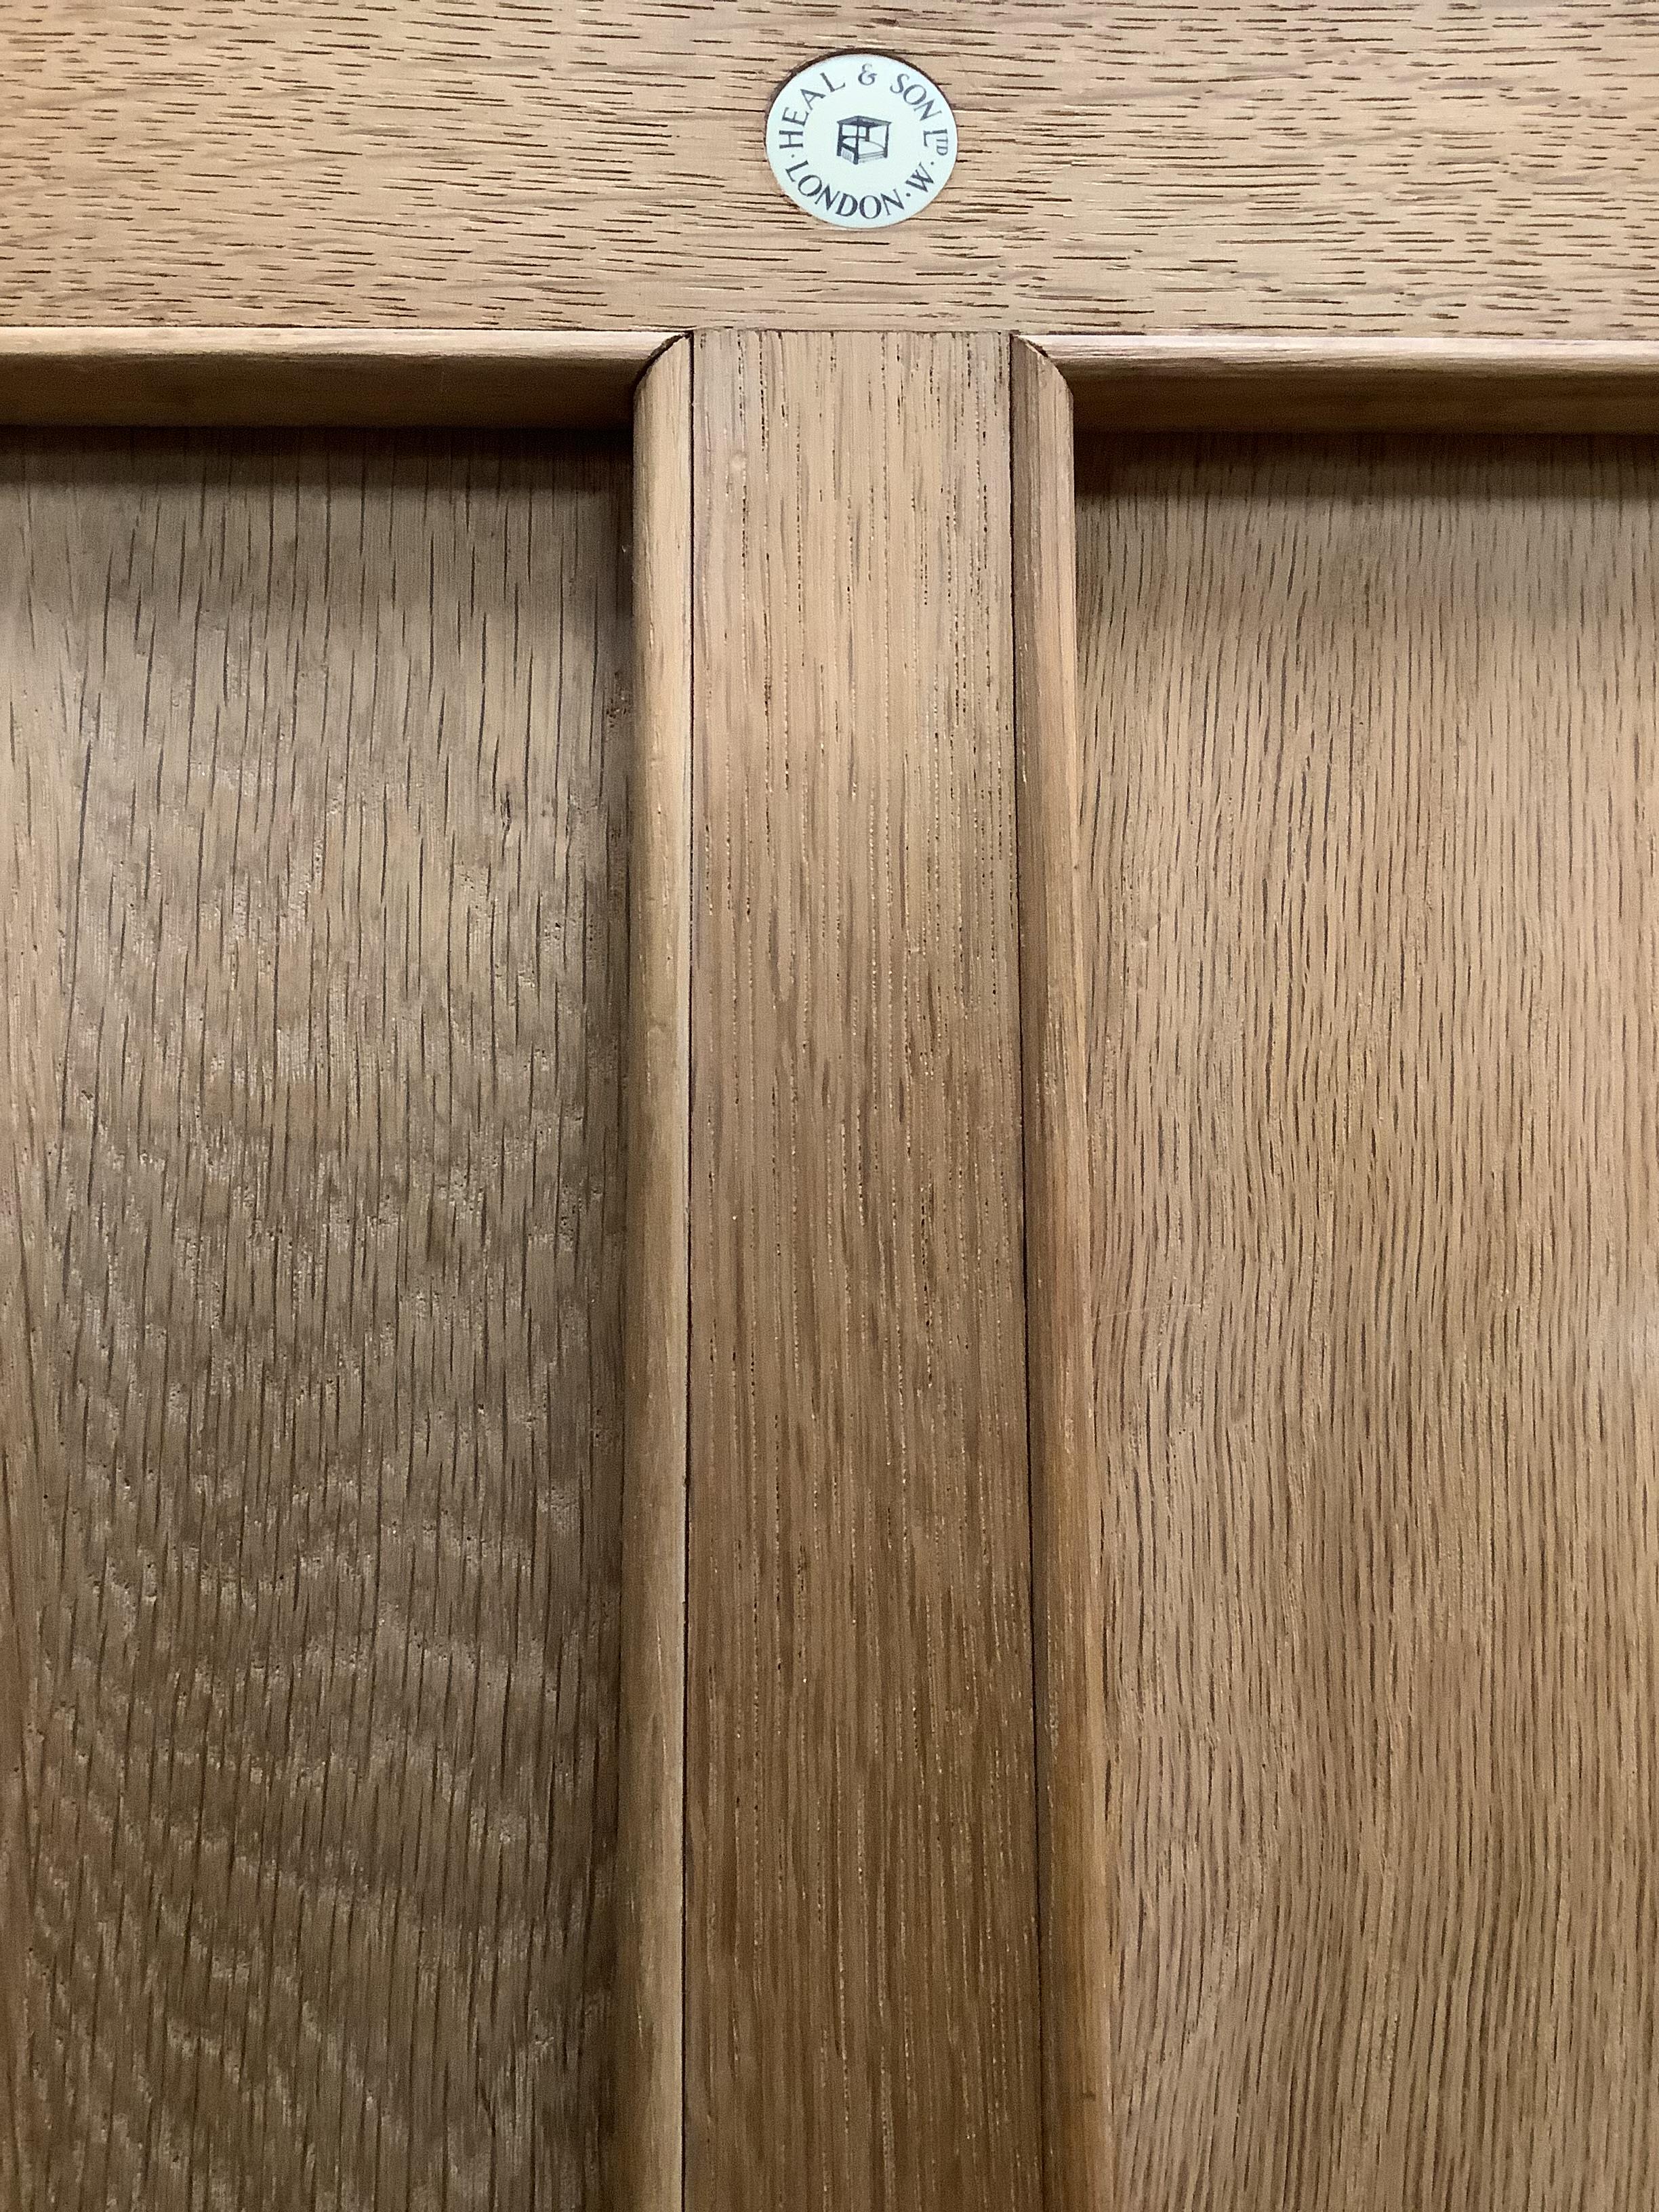 Heal & Son Ltd., London, a pair of bleached oak corner wardrobes, width 94cm, depth 53cm, height 182cm